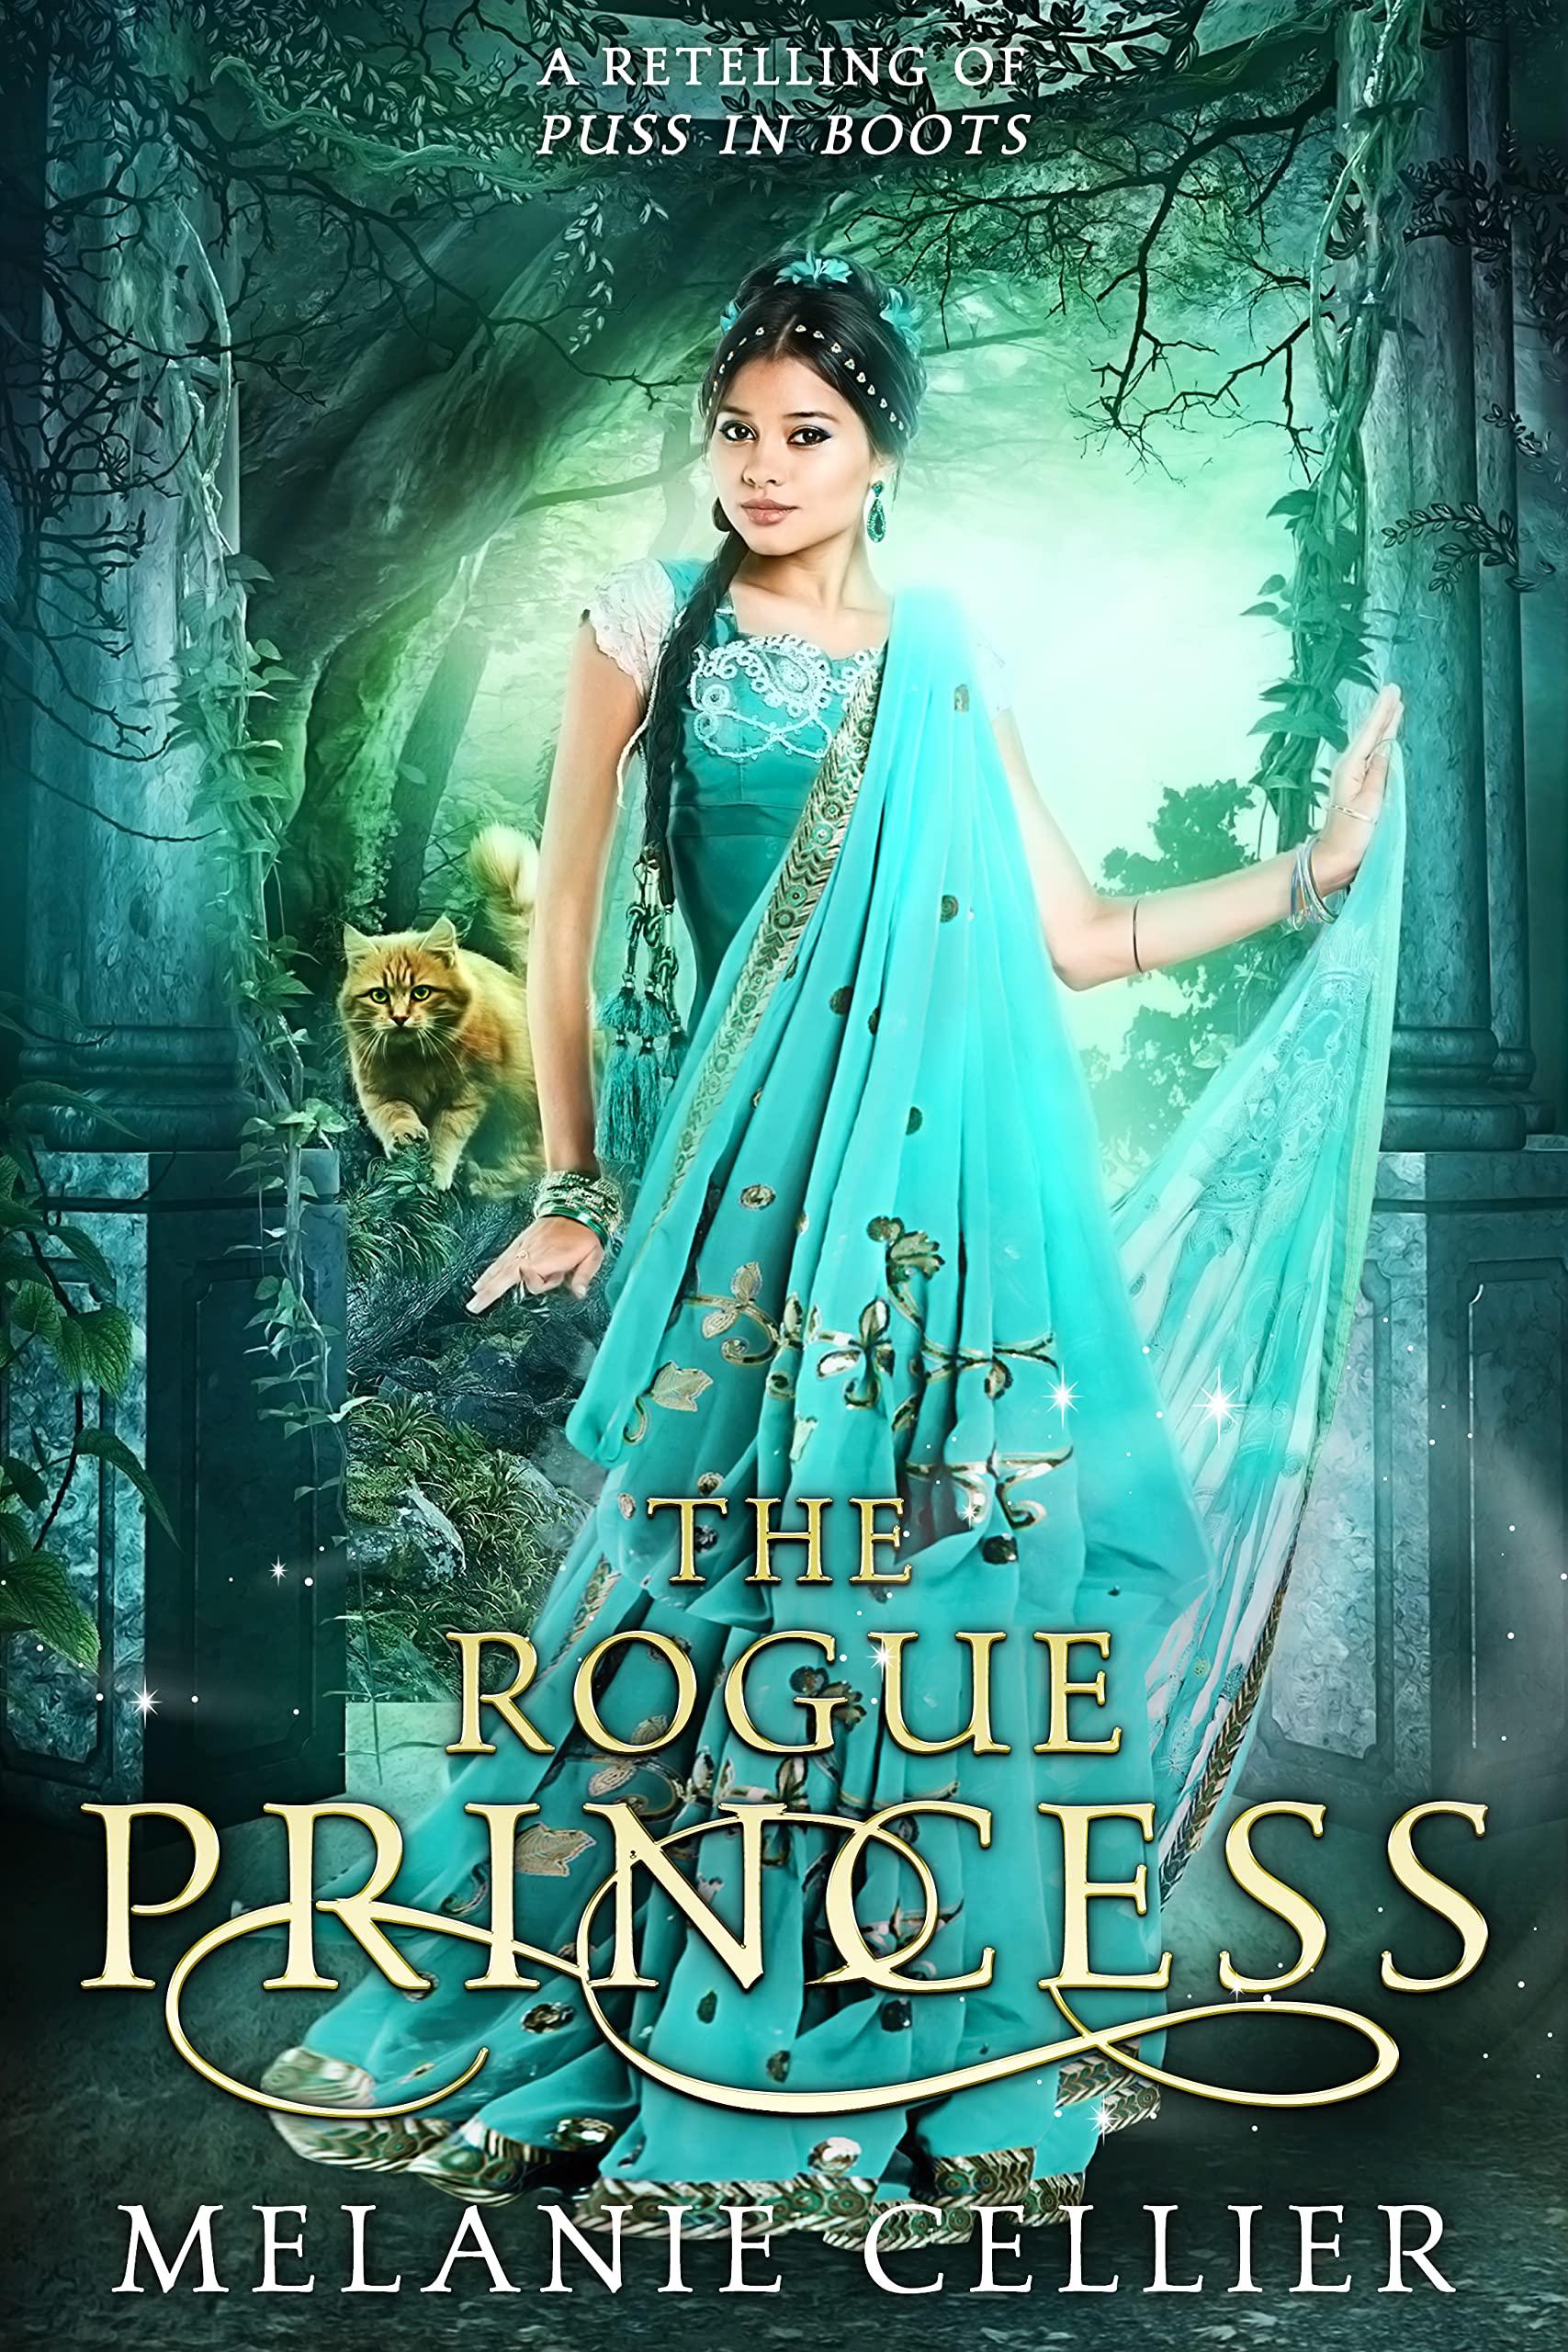 The Rogue Princess